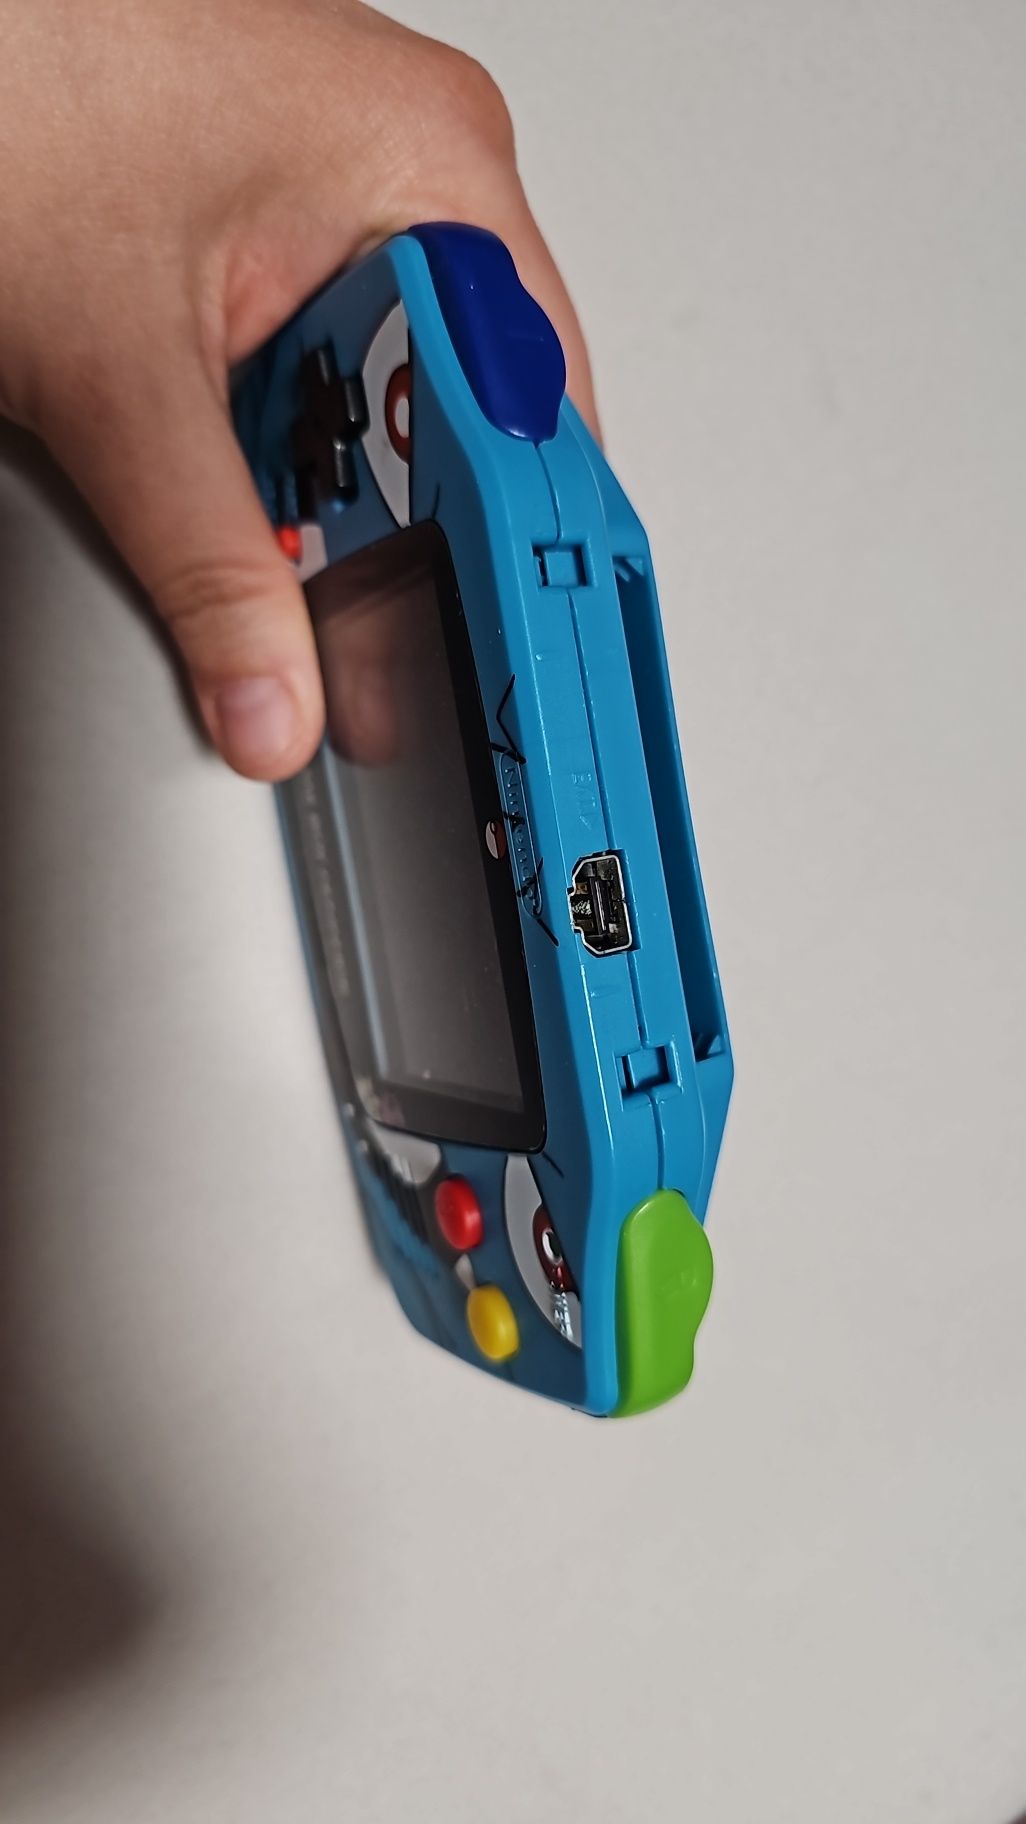 Nintendo Gameboy Advance reshell